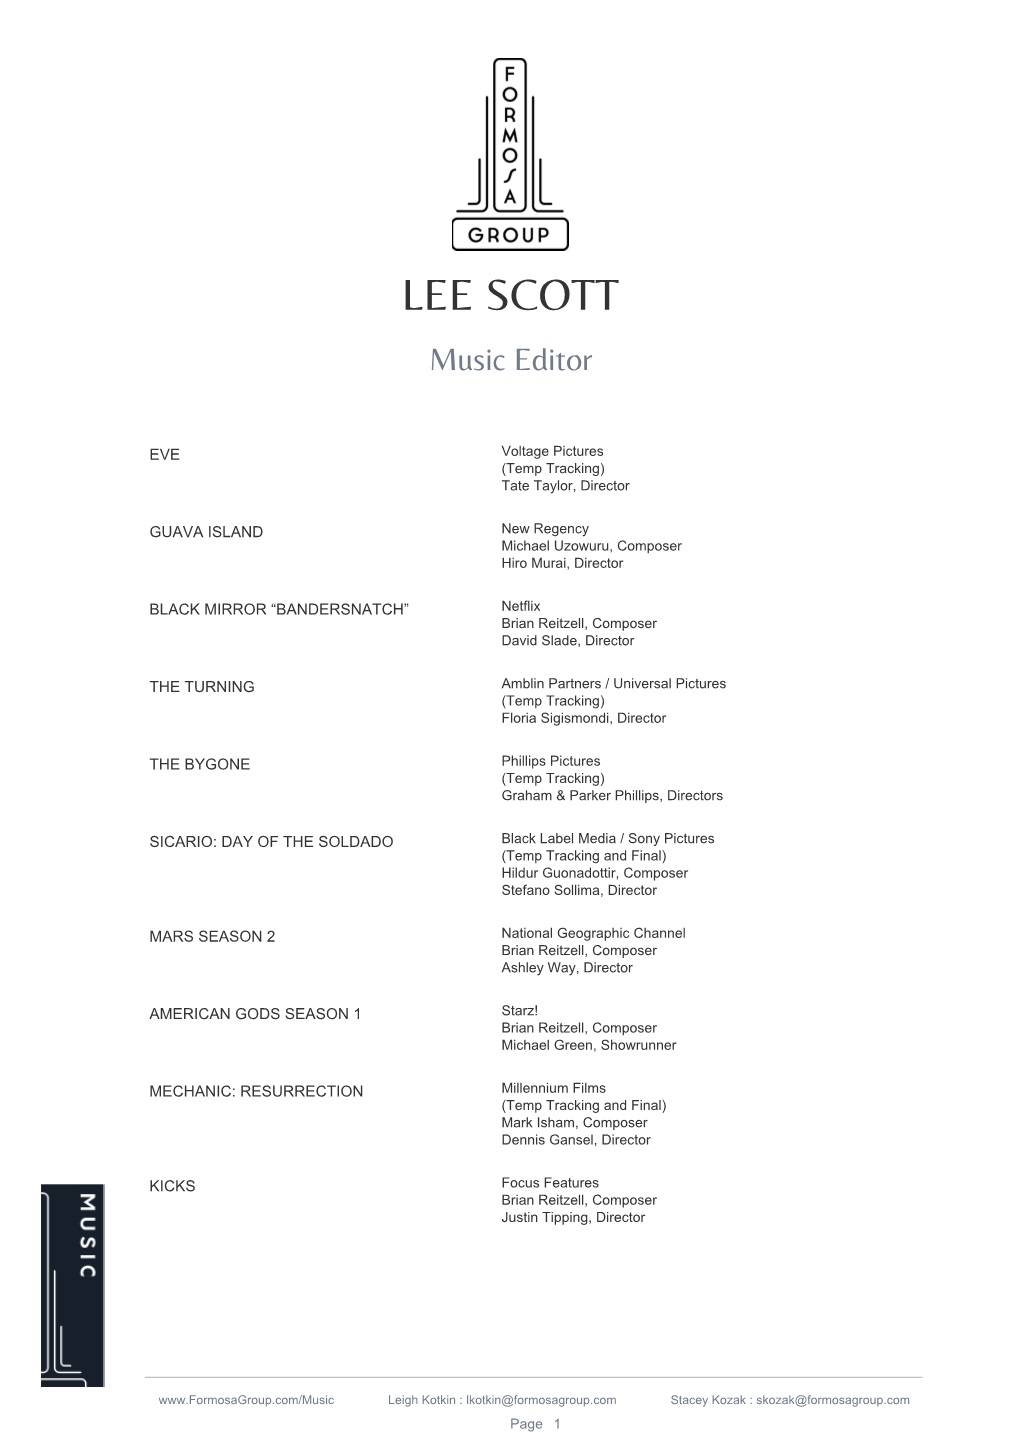 LEE SCOTT Music Editor